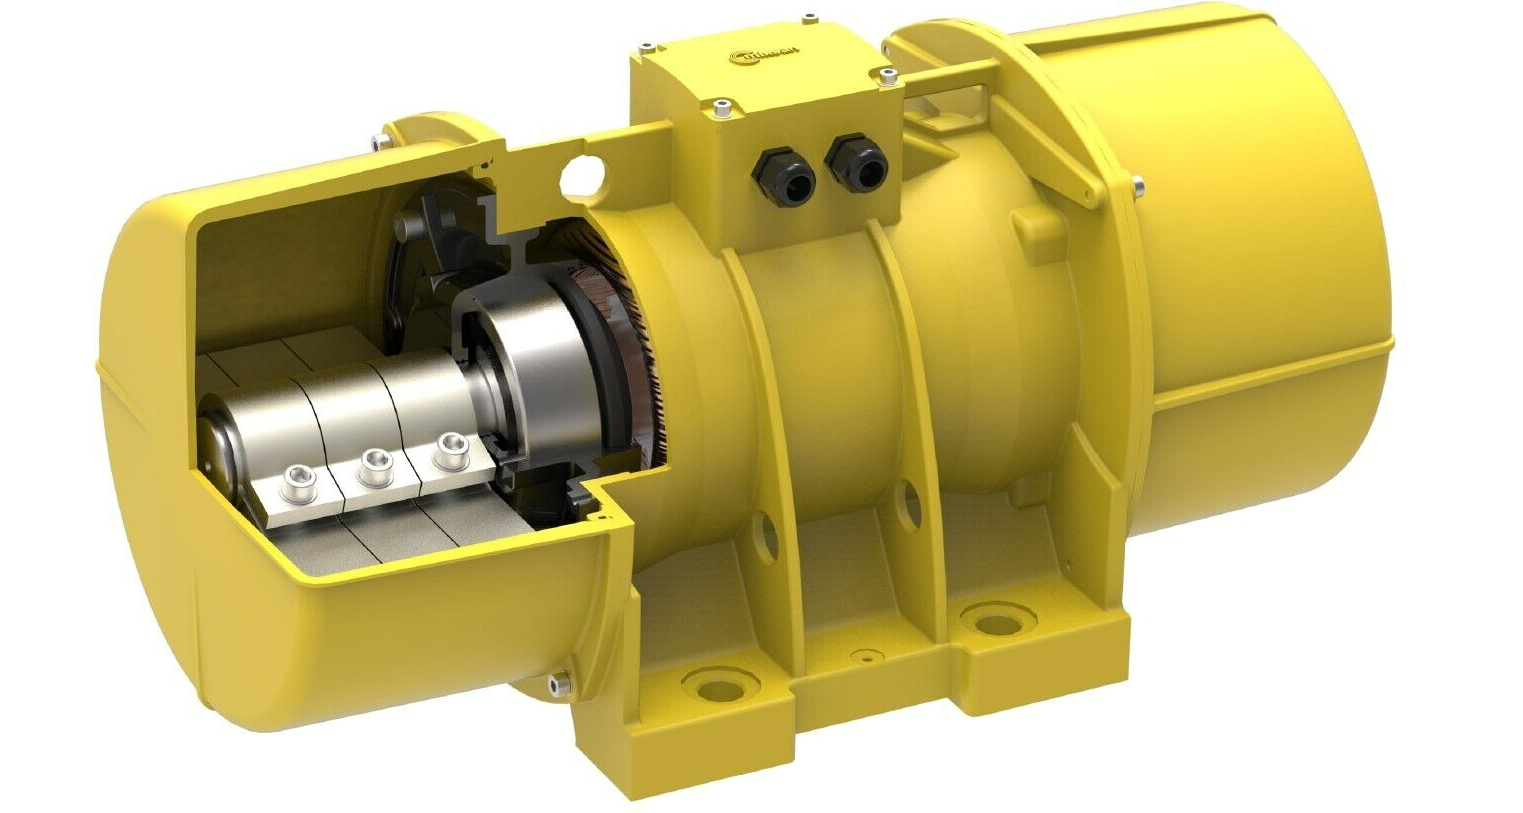 Picture of Industrial vibration motor 400V ATEX,  8 Pole vibrating motor unbalance motor external vibrator 750 RPM